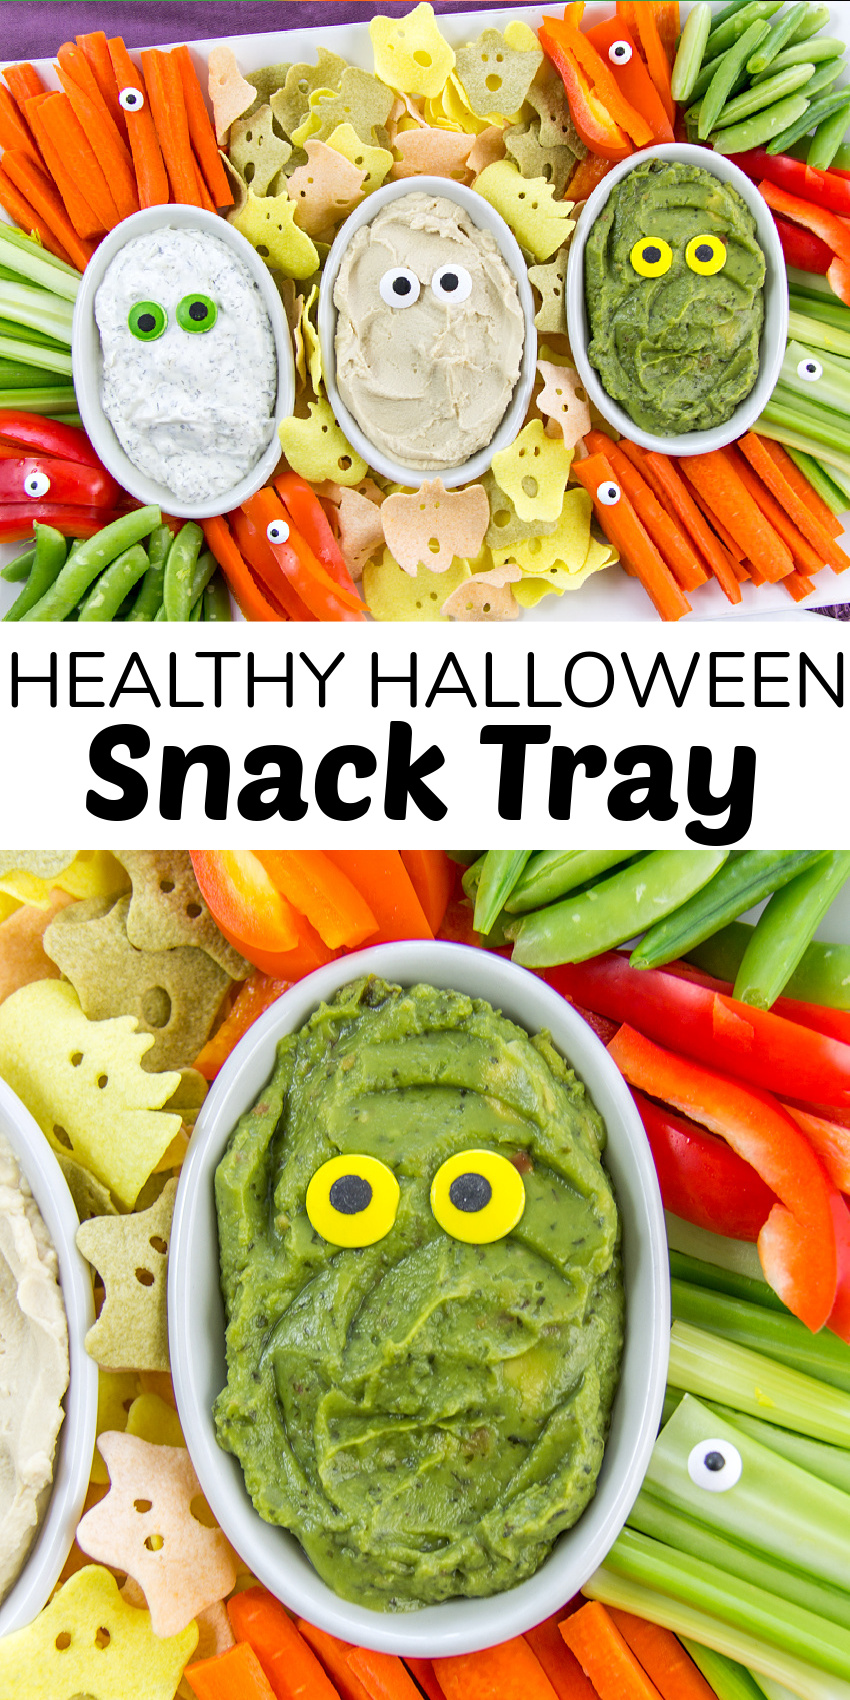 https://makeandtakes.com/wp-content/uploads/healthy-halloween-snacks-food-tray-pinterest.jpg